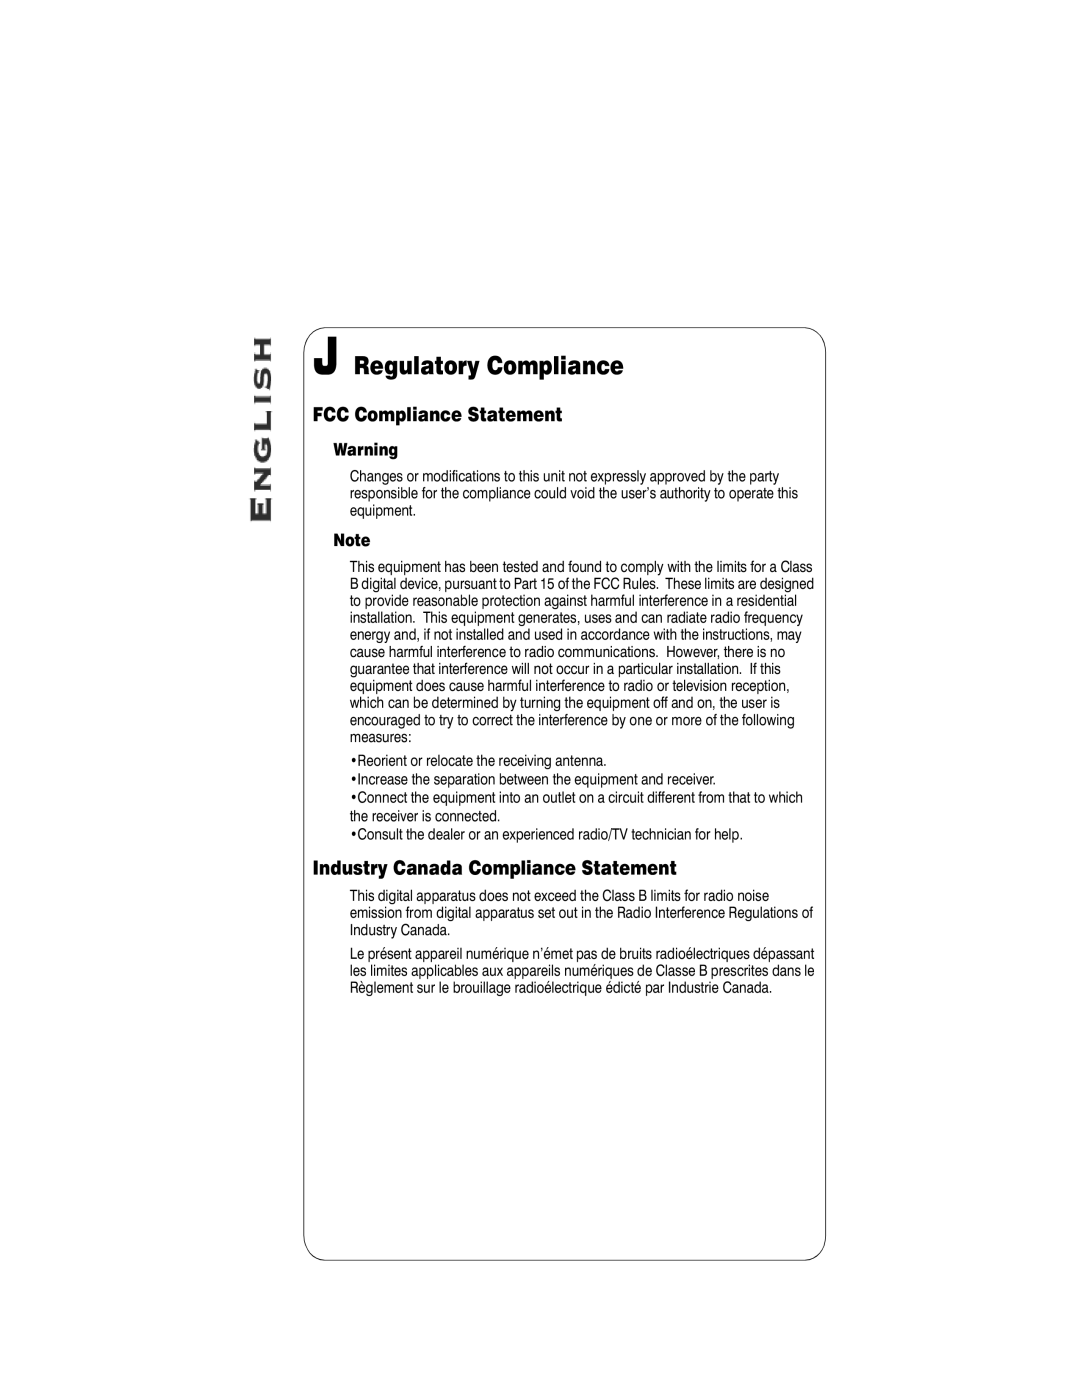 Matrox Electronic Systems 10574-MT-0102 manual J Regulatory Compliance, FCC Compliance Statement 